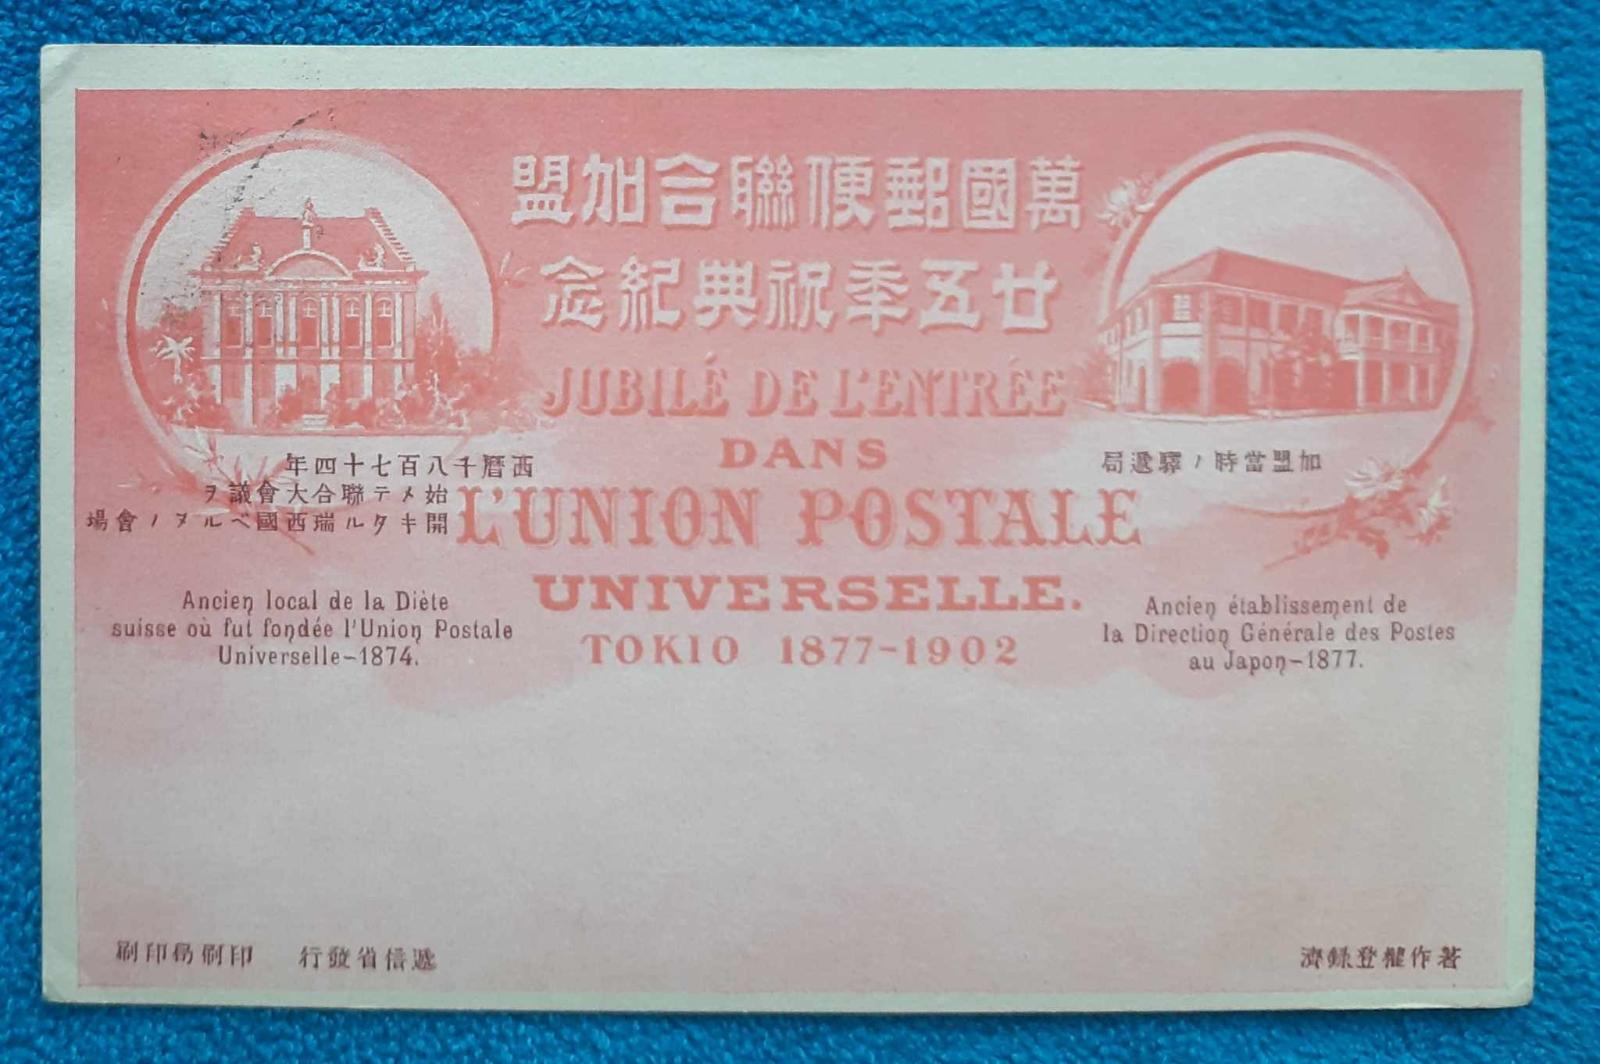 JAPONSKO - 25 ROKOV UNION POSTALE TOKIO - 1902 - PEKNÁ RARITA FILATELIE - Pohľadnice